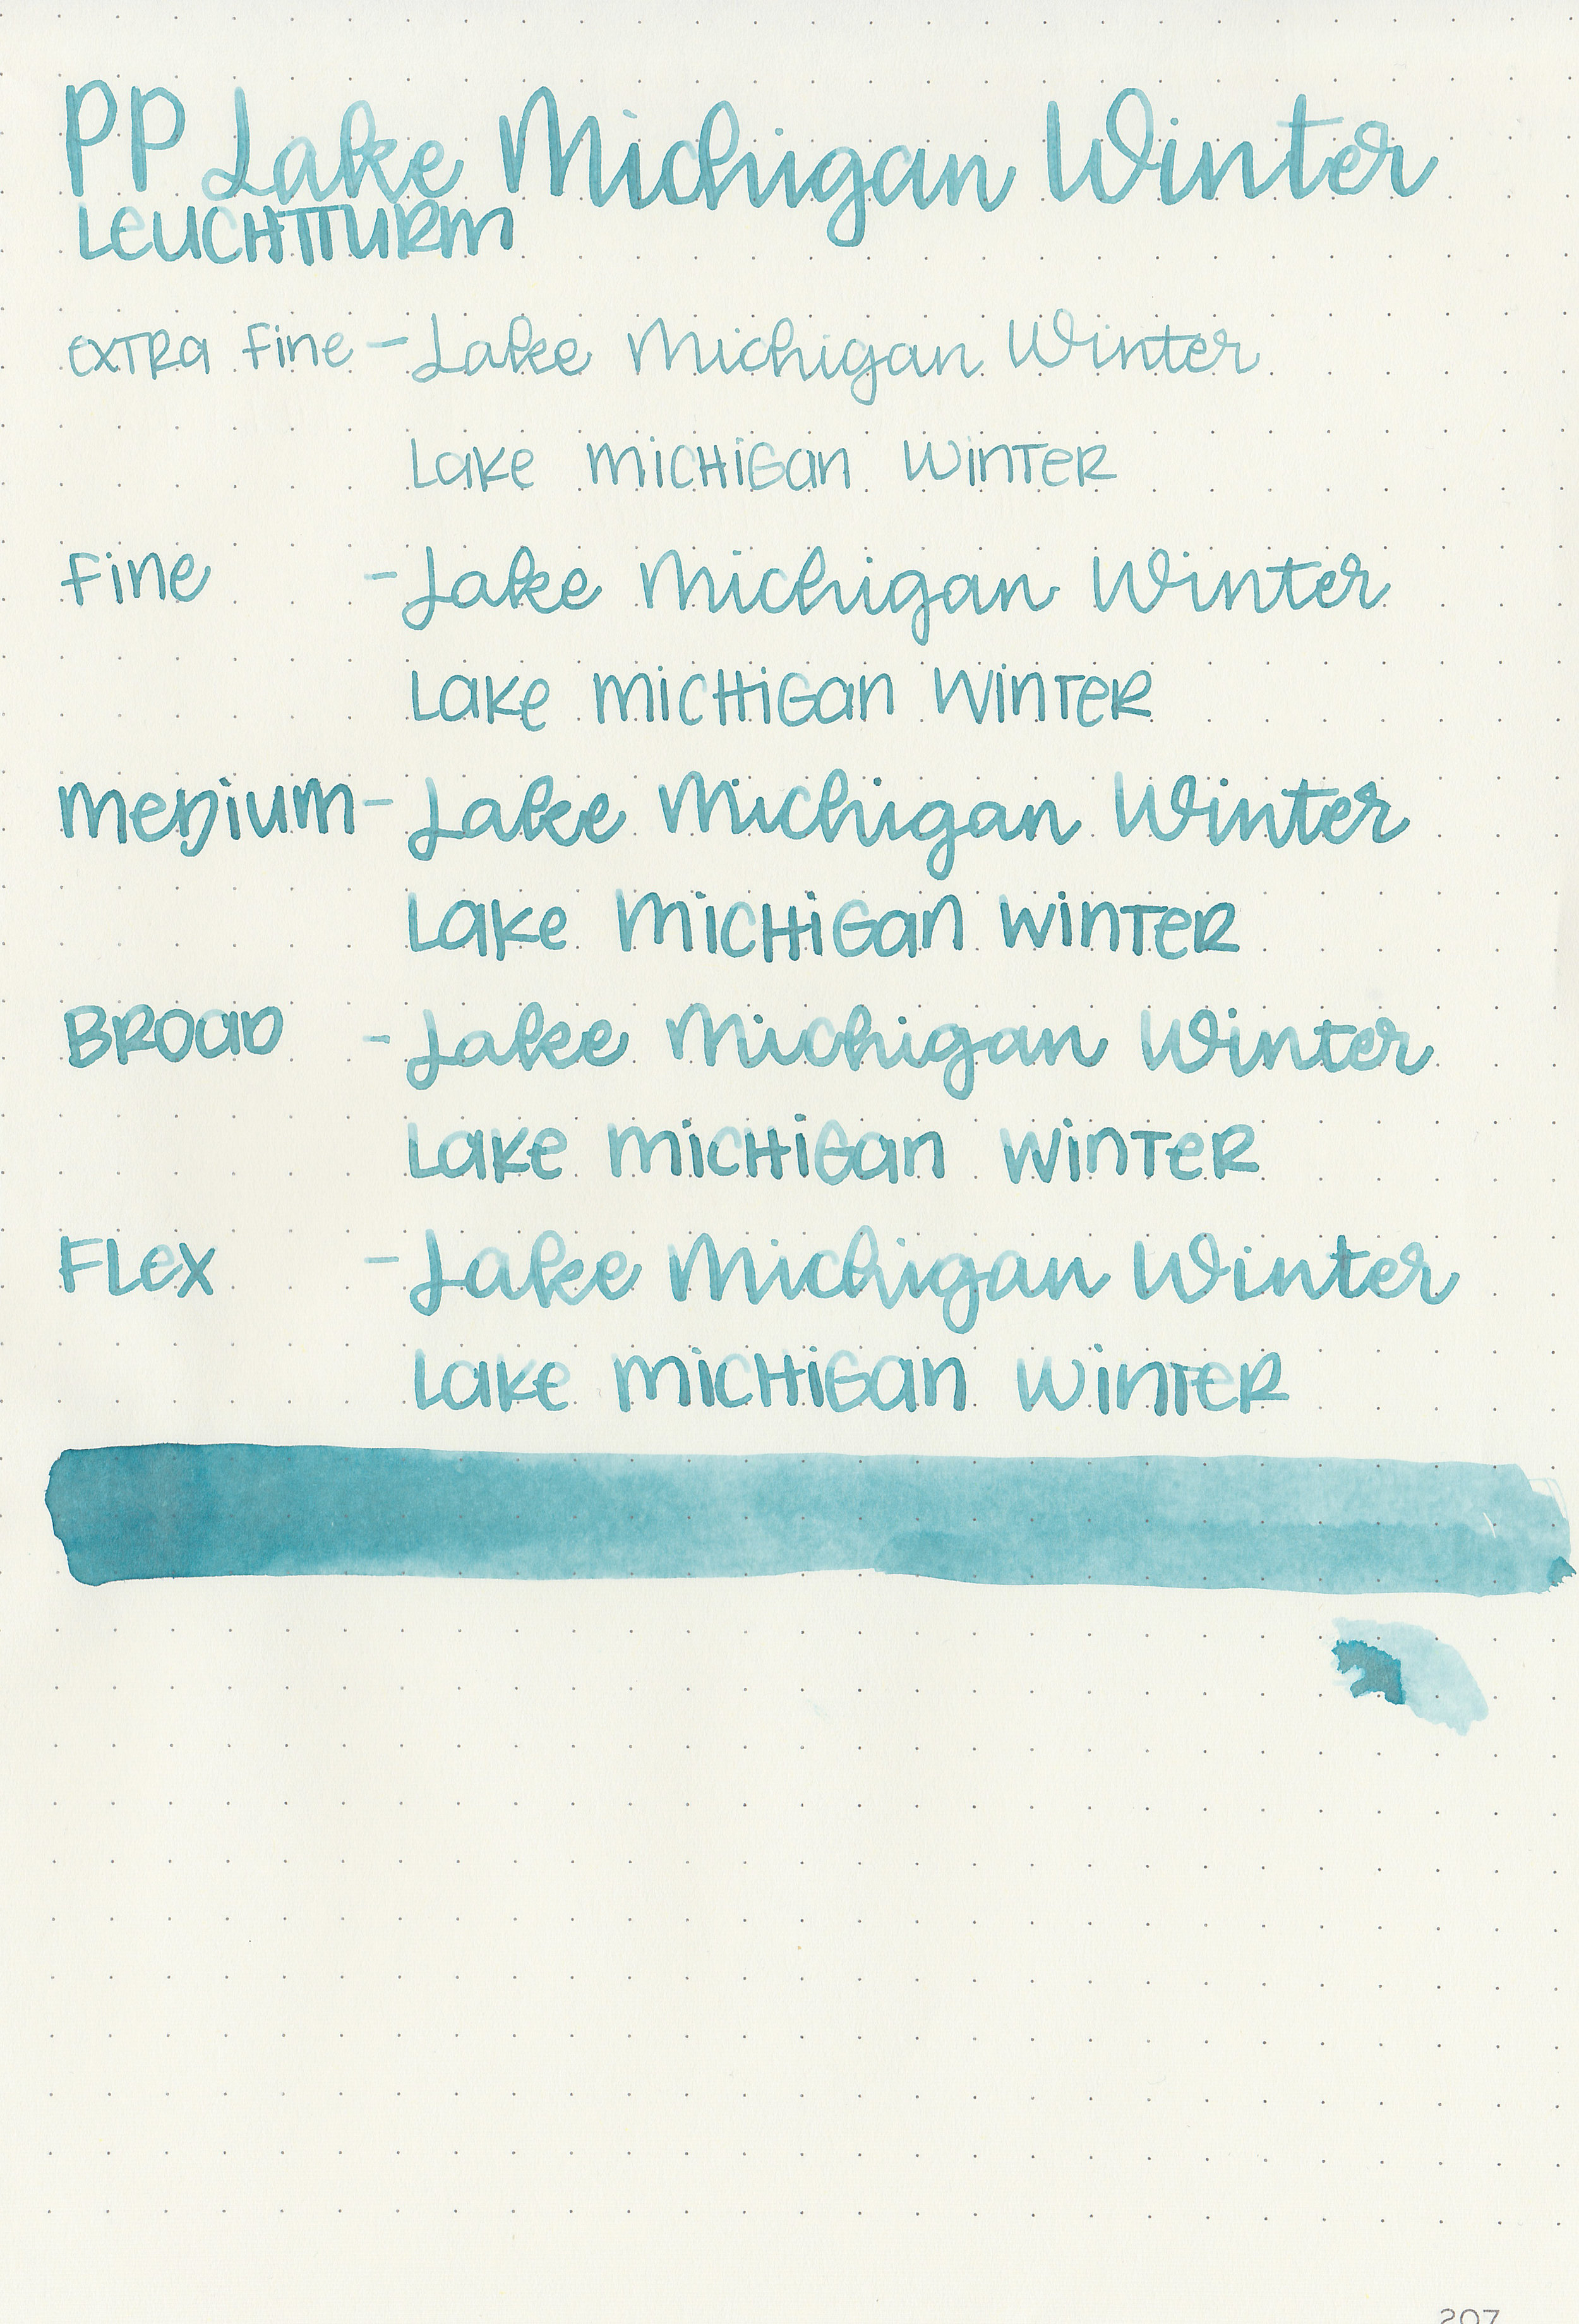 pp-lake-michigan-winter-9.jpg